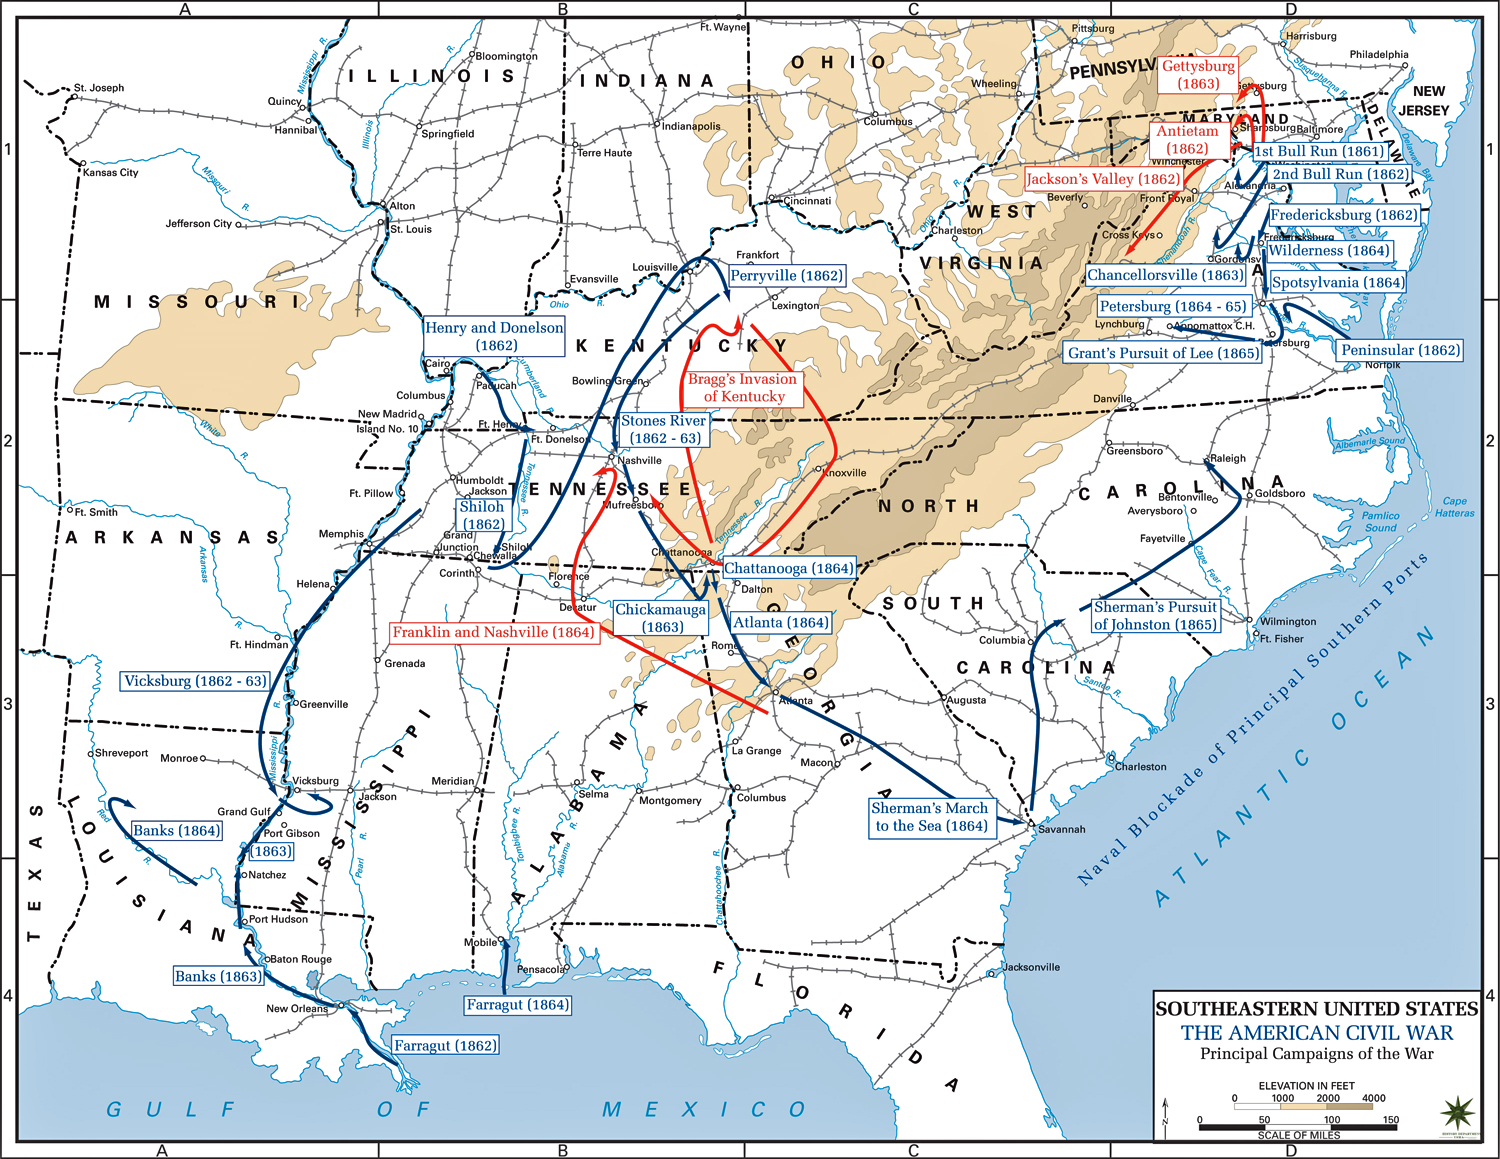 Map of the American Civil War: Principal Campaigns 1861-1865